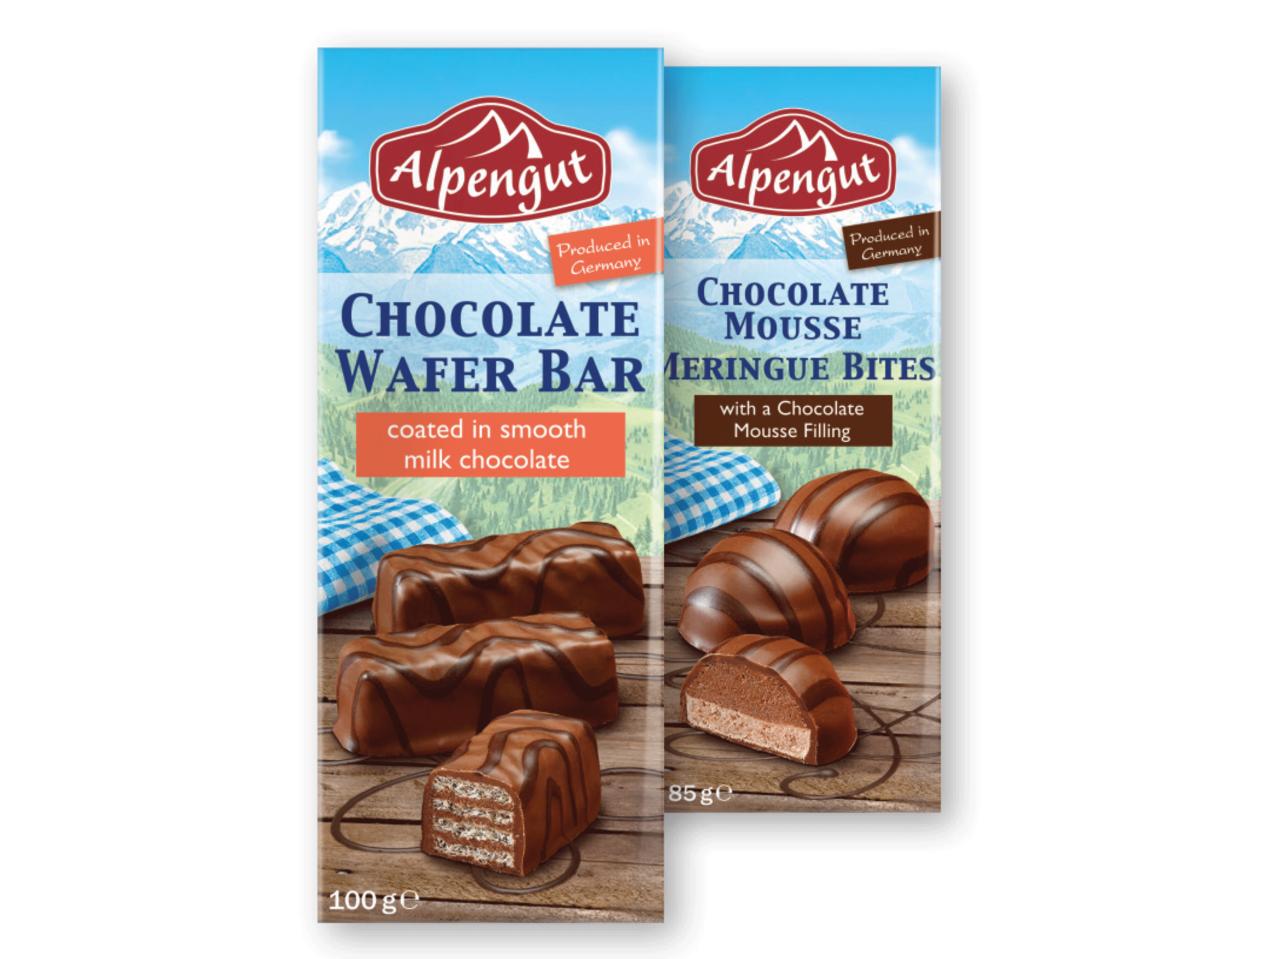 ALPENGUT Chocolate Mousse Meringue Bites/ Chocolate Wafer Bar